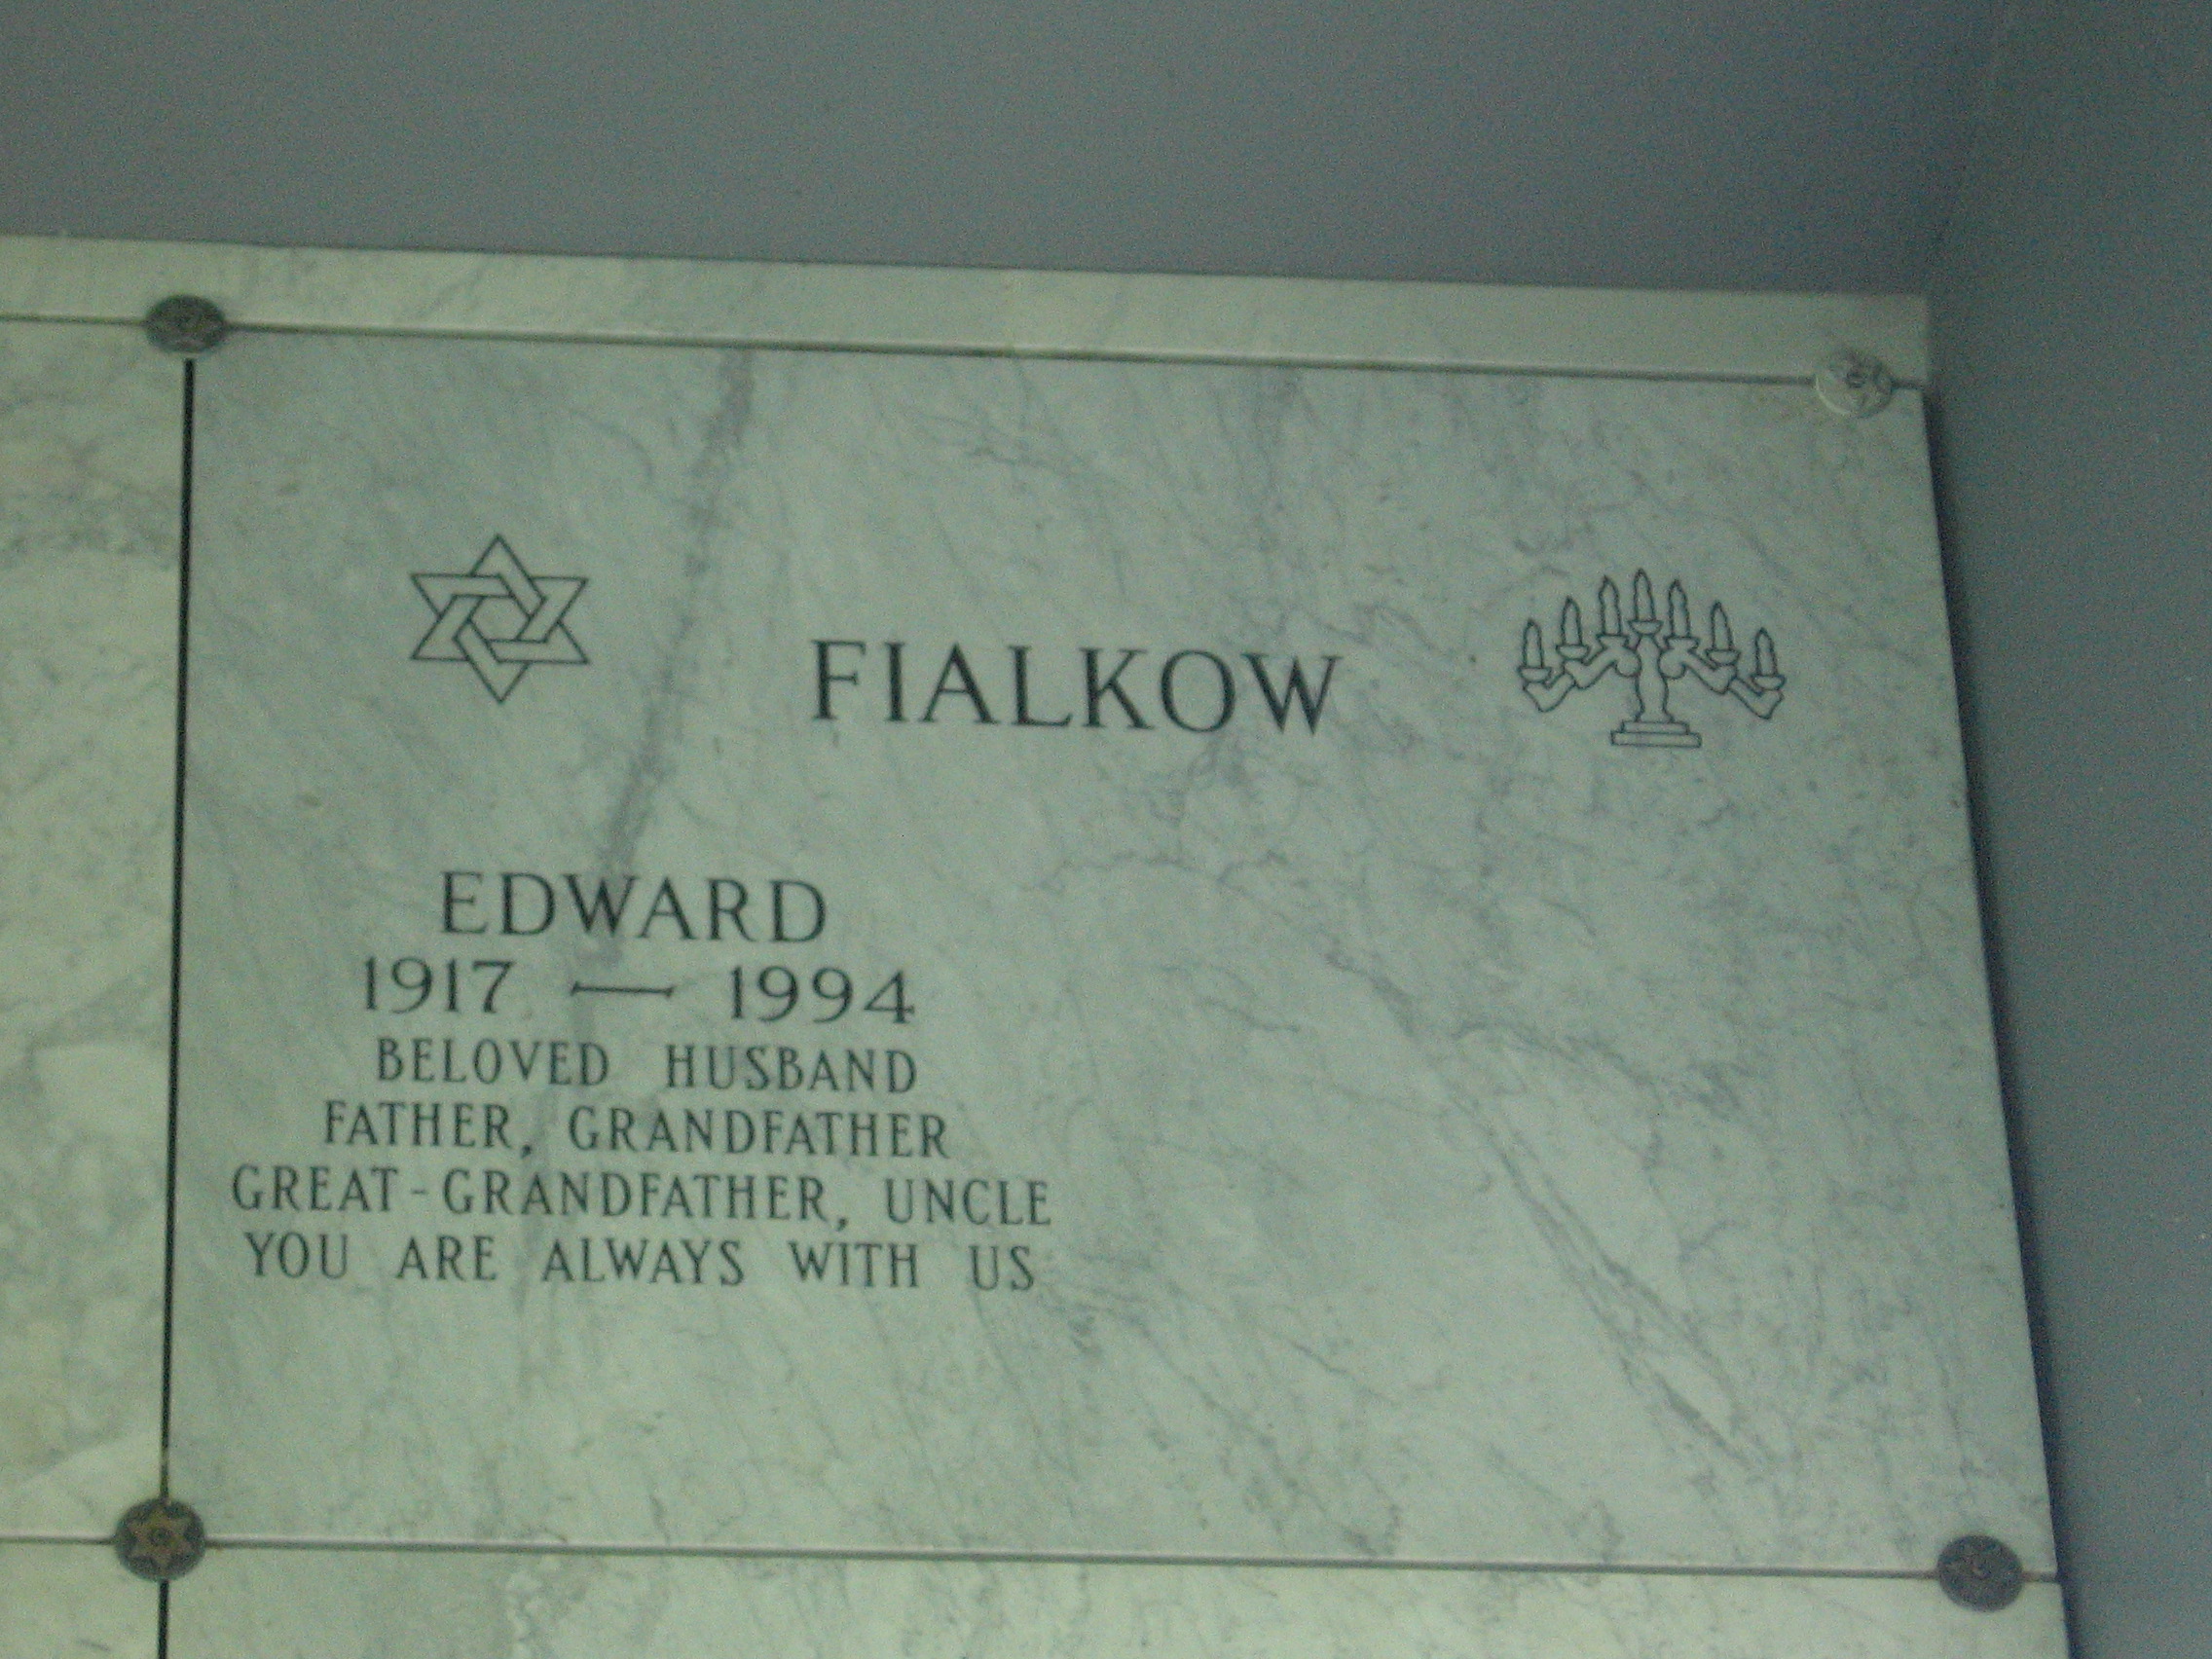 Edward Fialkow